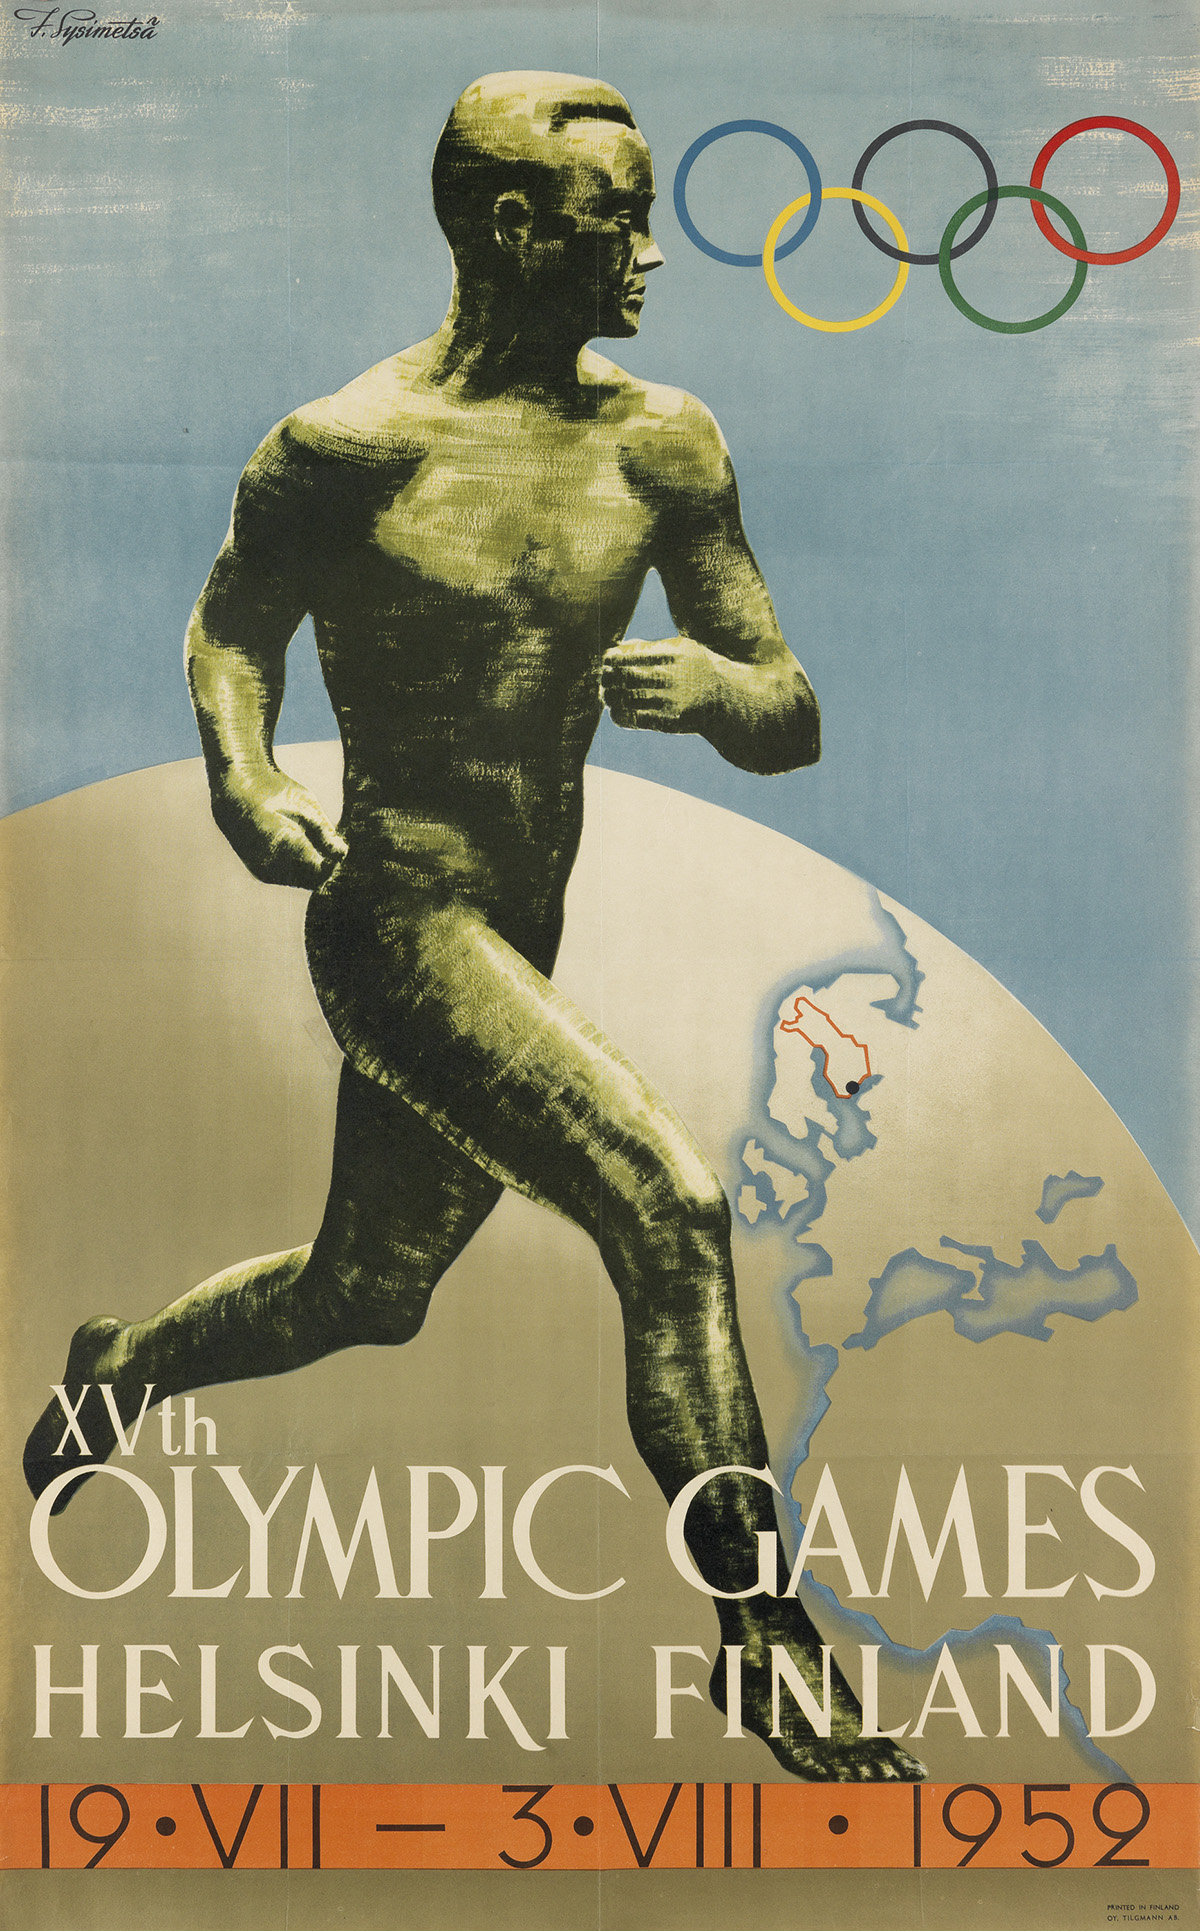 ILMARI SYSIMETSÃ (1912-1955). XVTH OLYMPIC GAMES / HELSINKI FINLAND. 1952. 39x24 inches, 99x62 cm. Oy. Tilgmann AB, [Helsinki.]